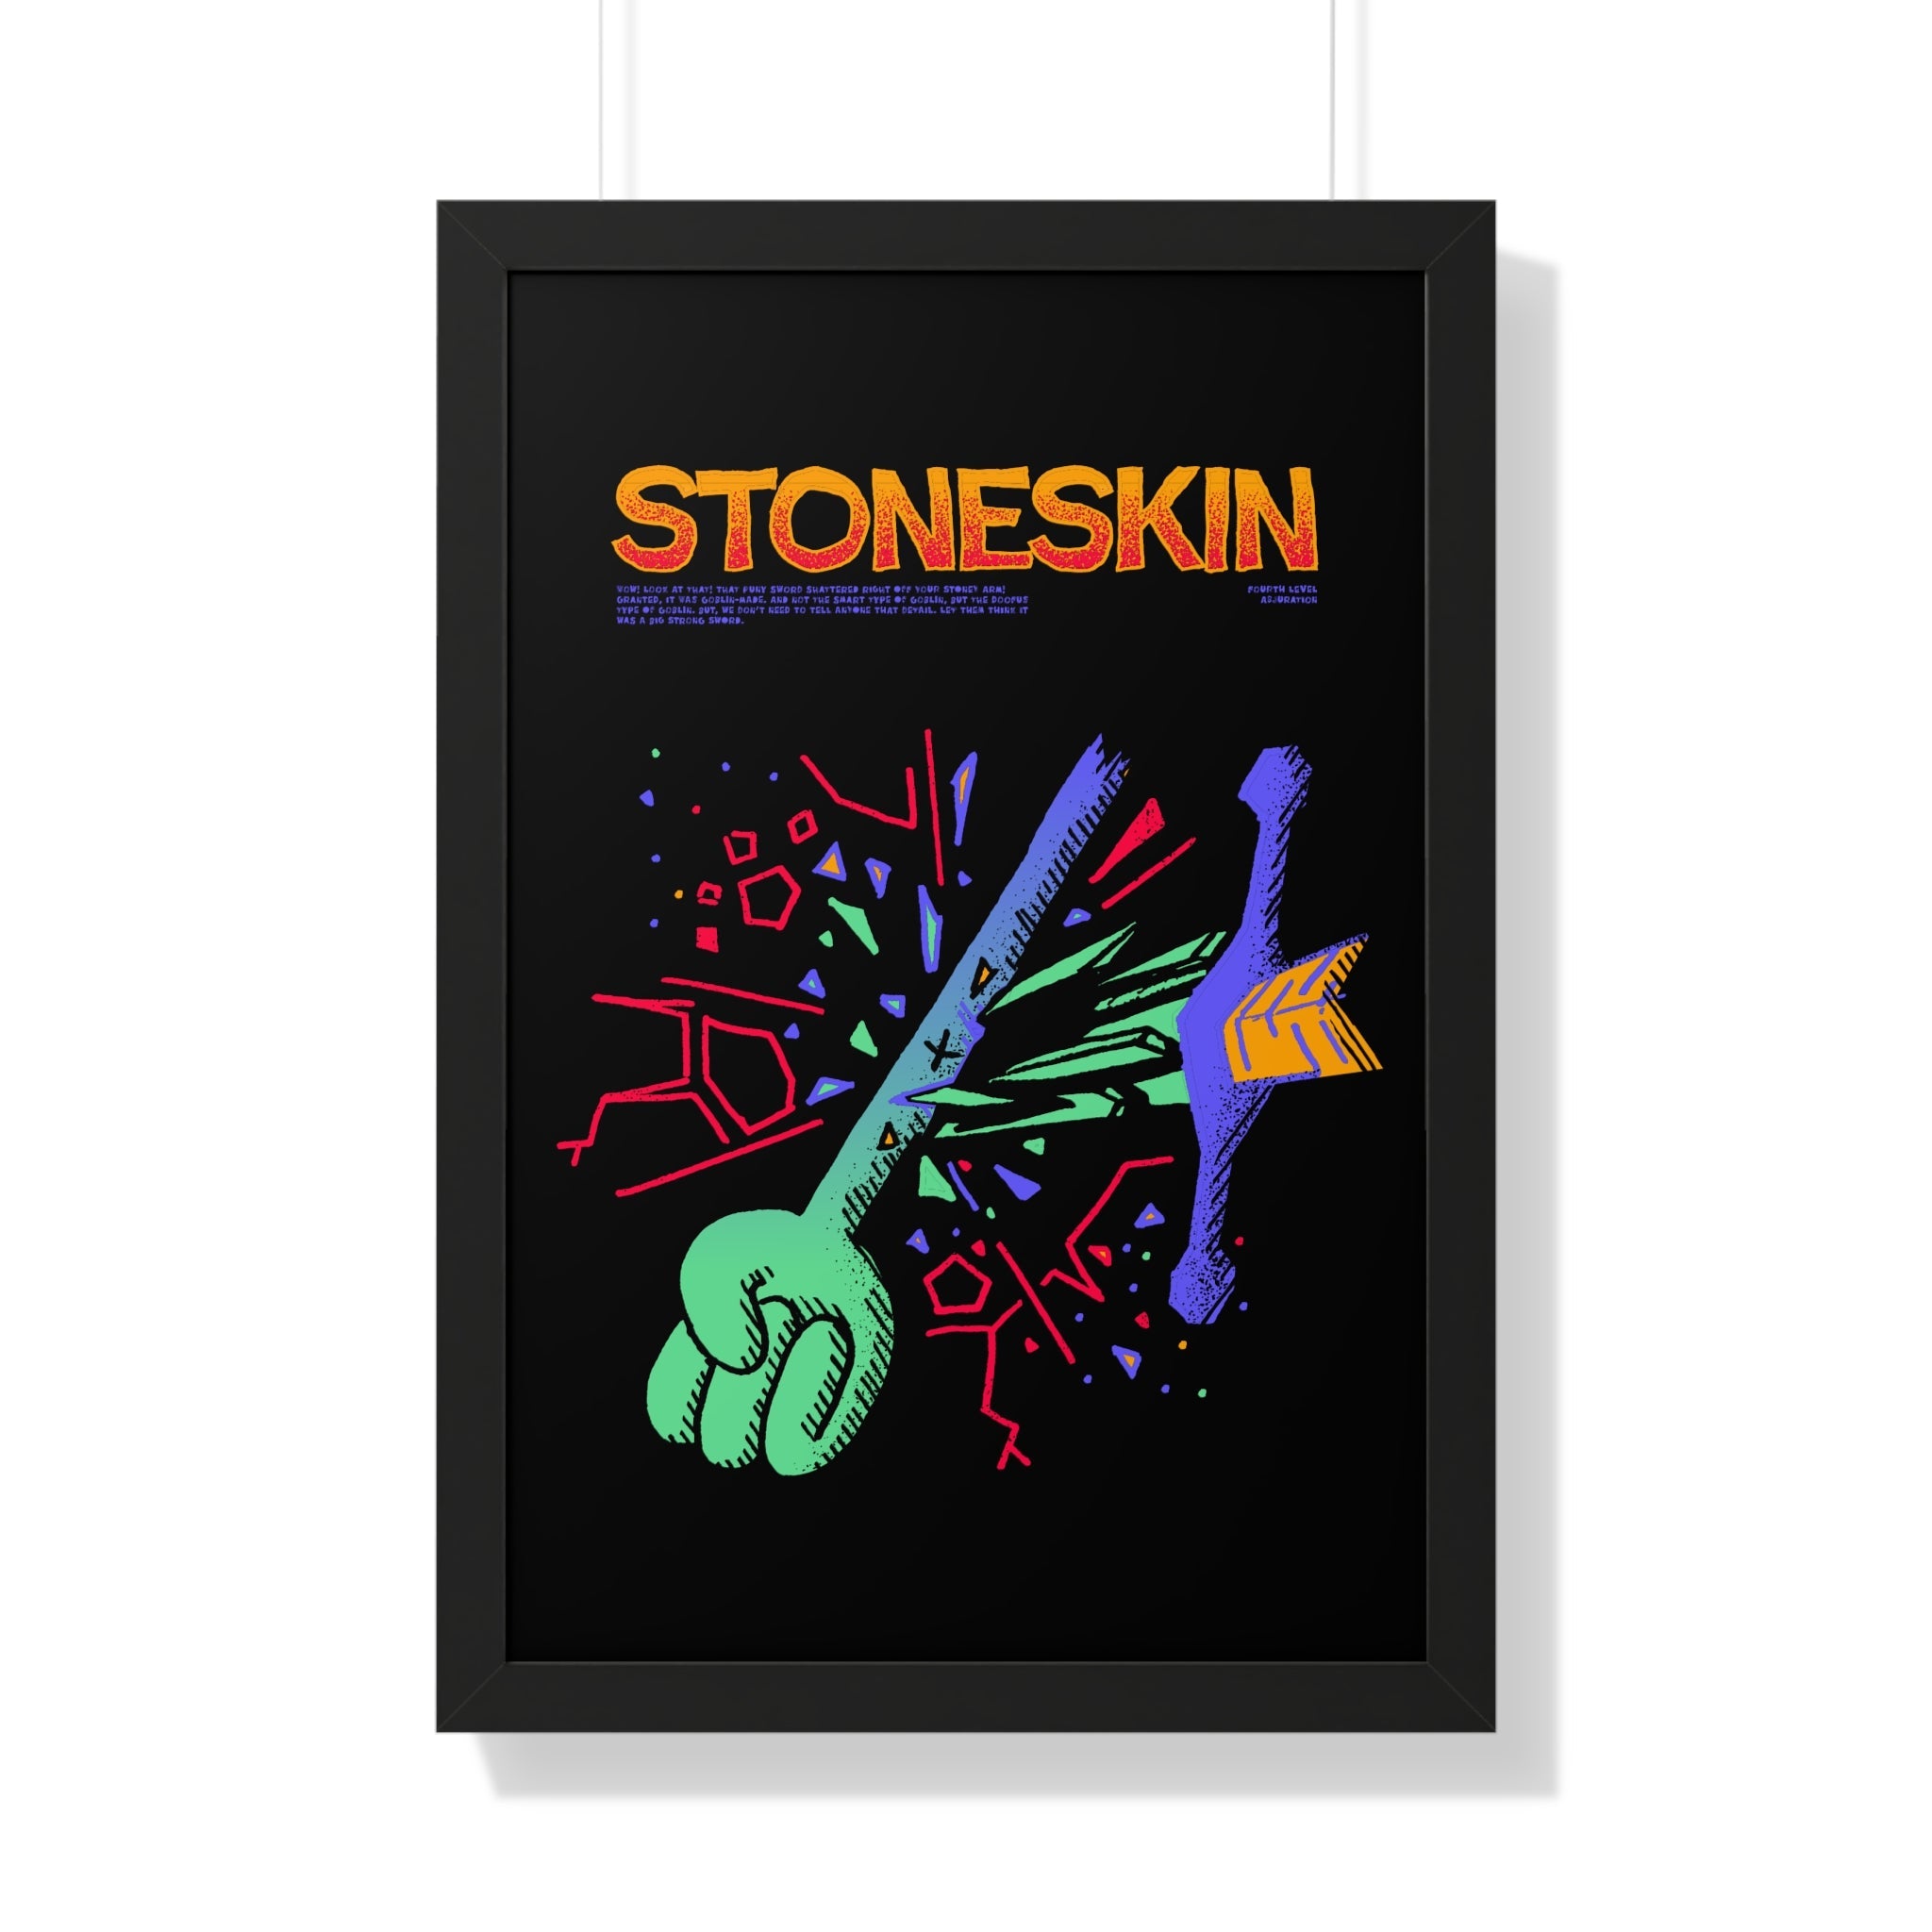 Stoneskin | Framed Poster - Framed Poster - Ace of Gnomes - 33355633182514365407